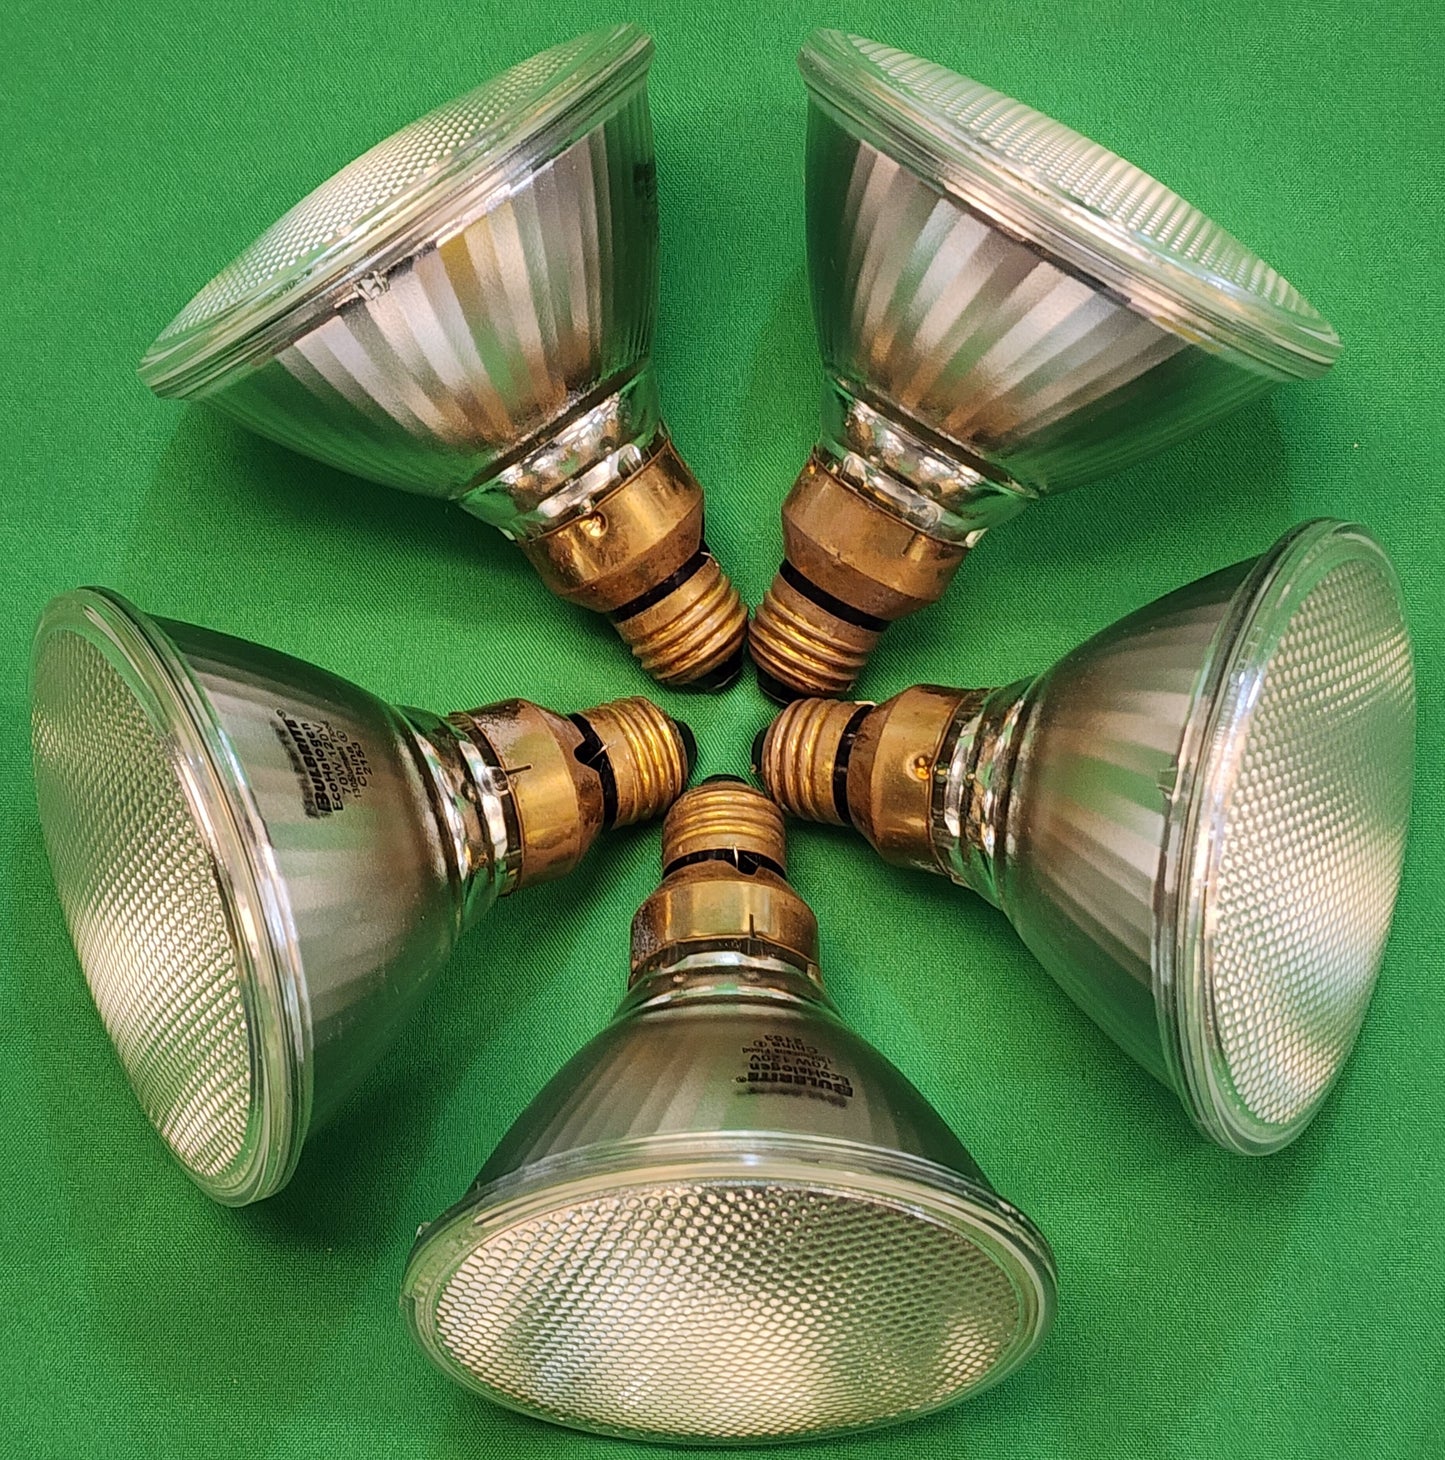 Lot of 5 Bulbrite Halogen Incandescent Light Bulbs (684473) 70 watt - 120 volt